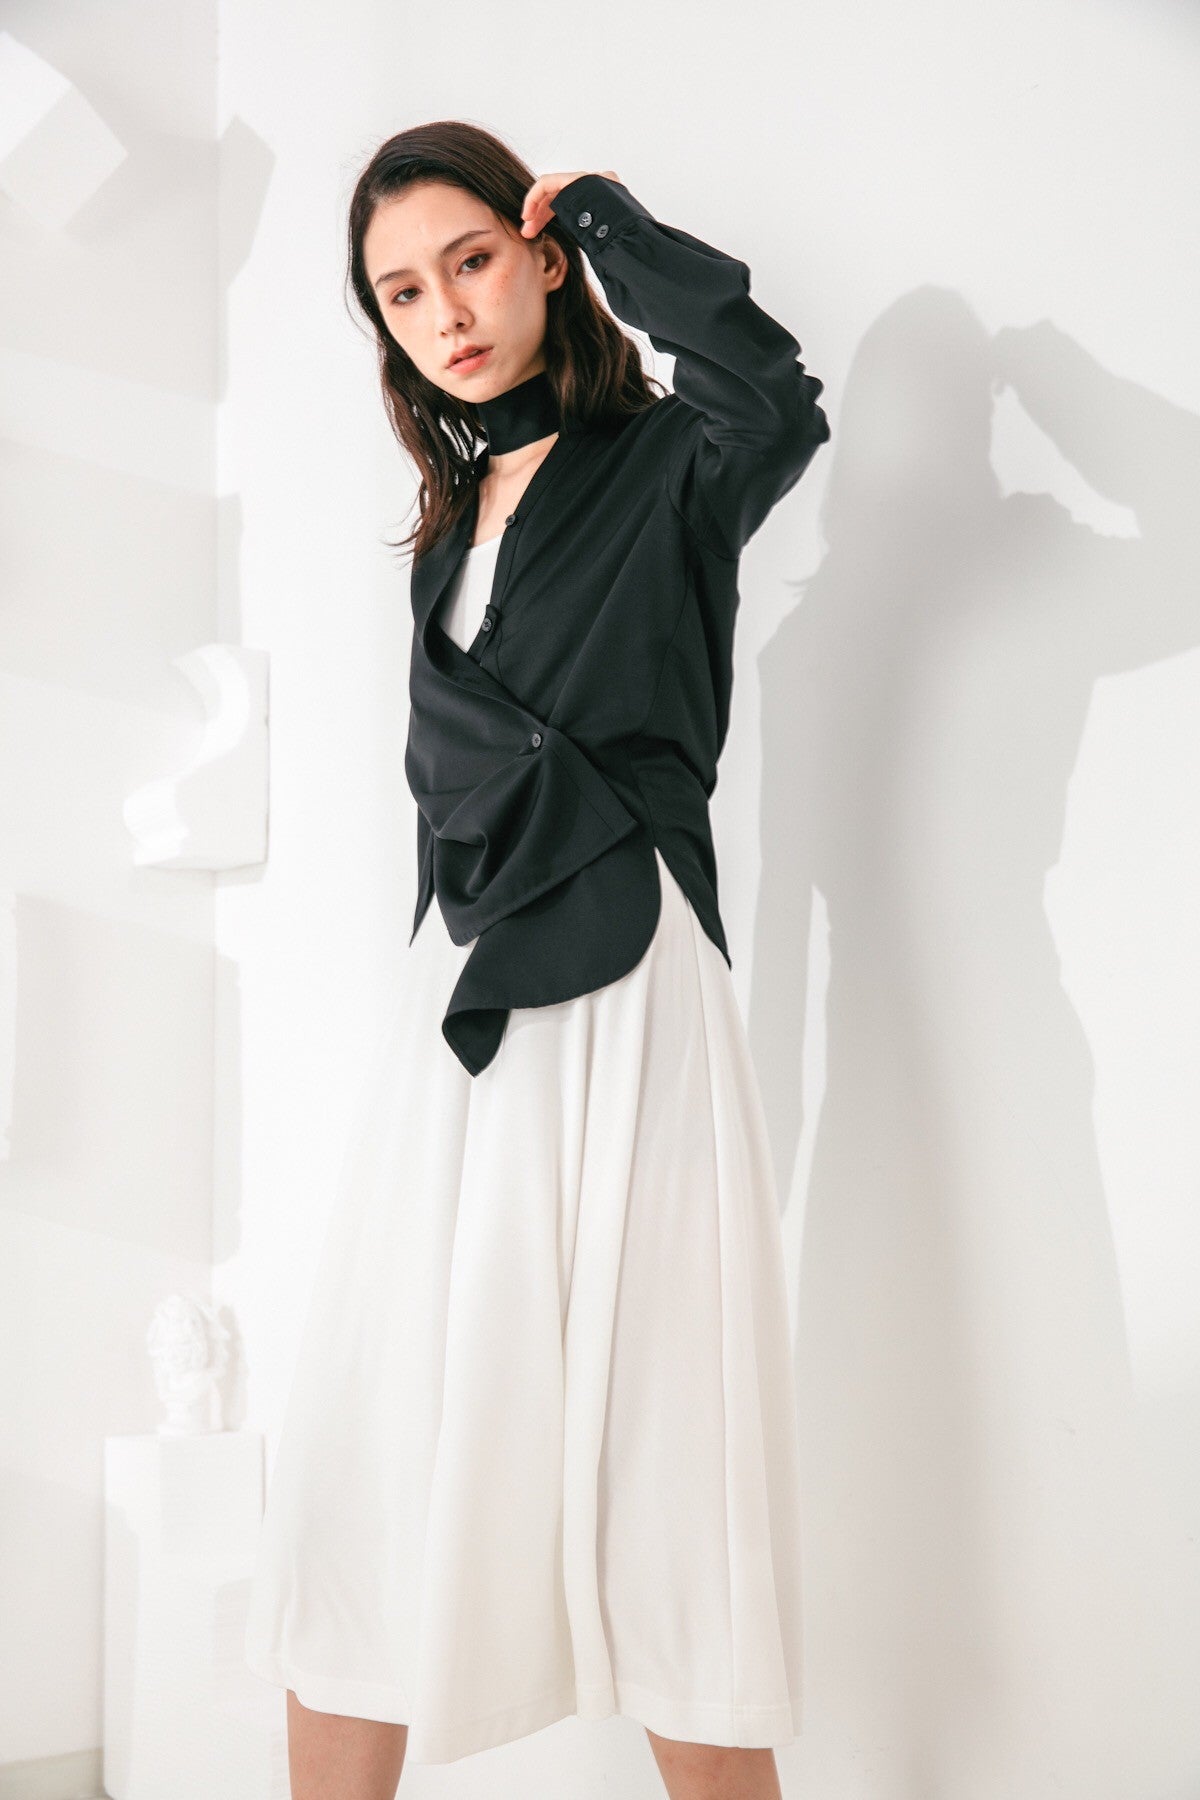 SKYE San Francisco SF shop ethical modern minimalist quality women clothing fashion Eléonore Blouse black 6